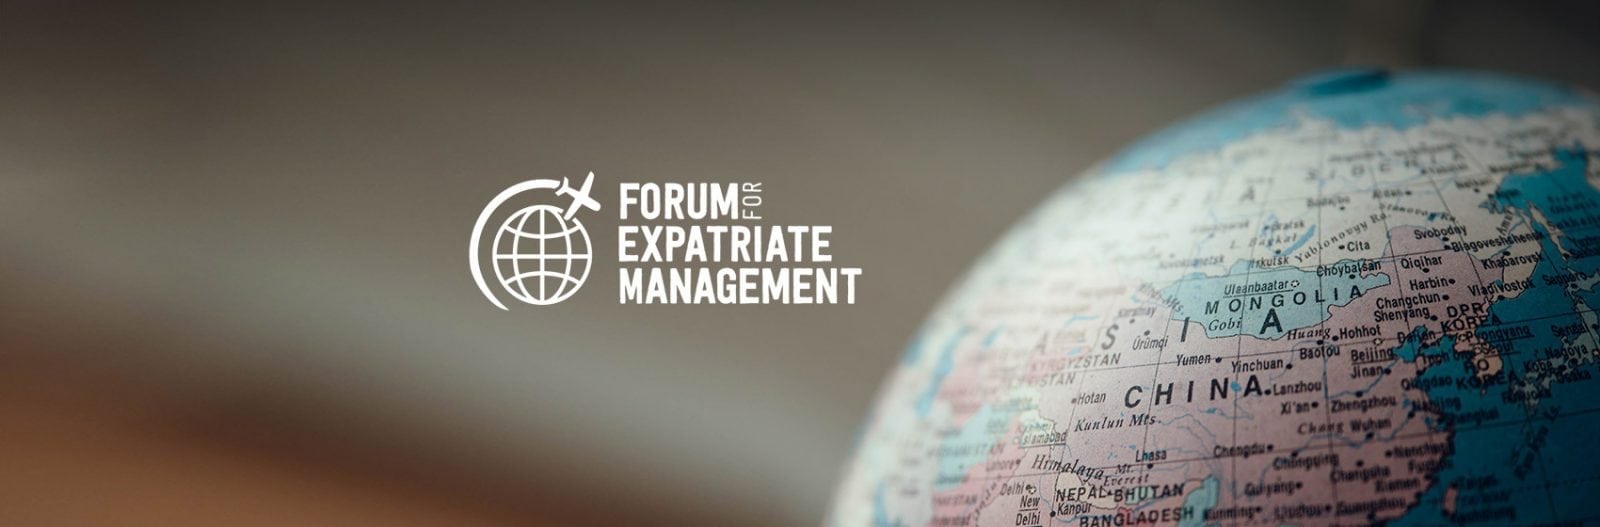 Forum for Expatriate Management - Globe